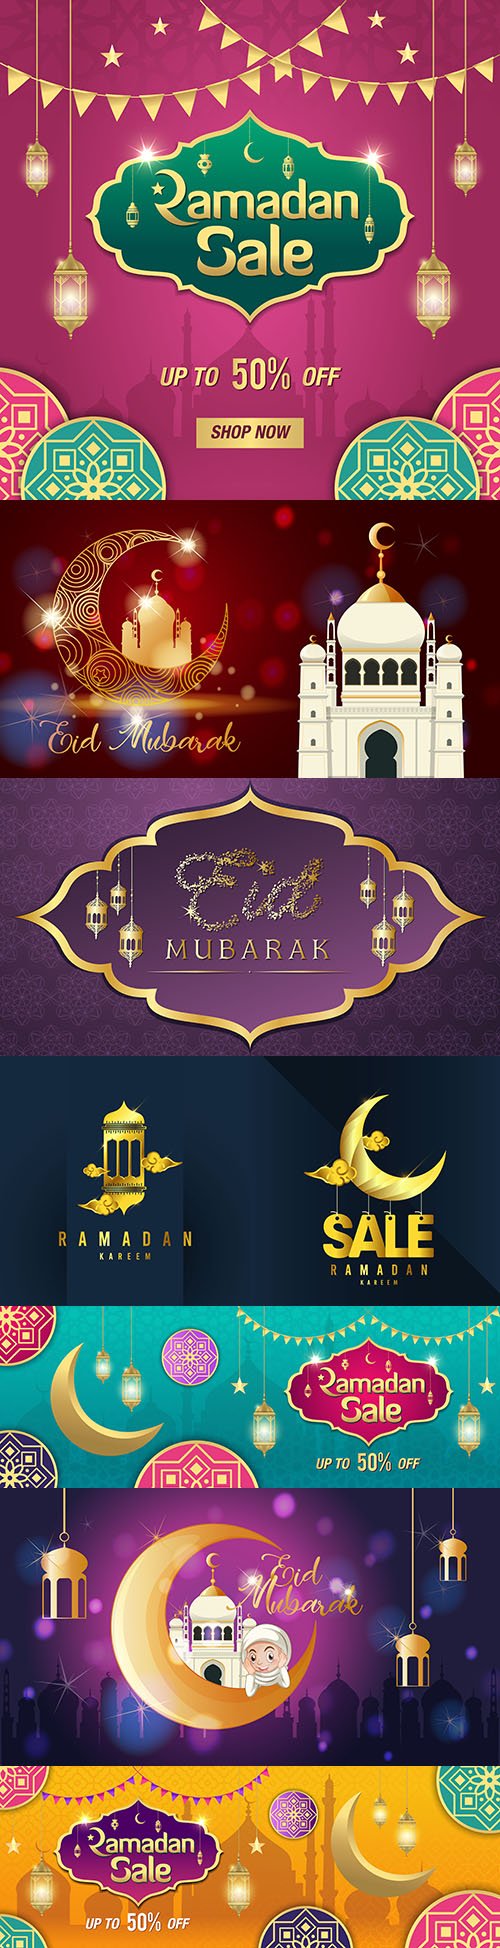 Eid Mubarak and Ramadan Karrem sale background